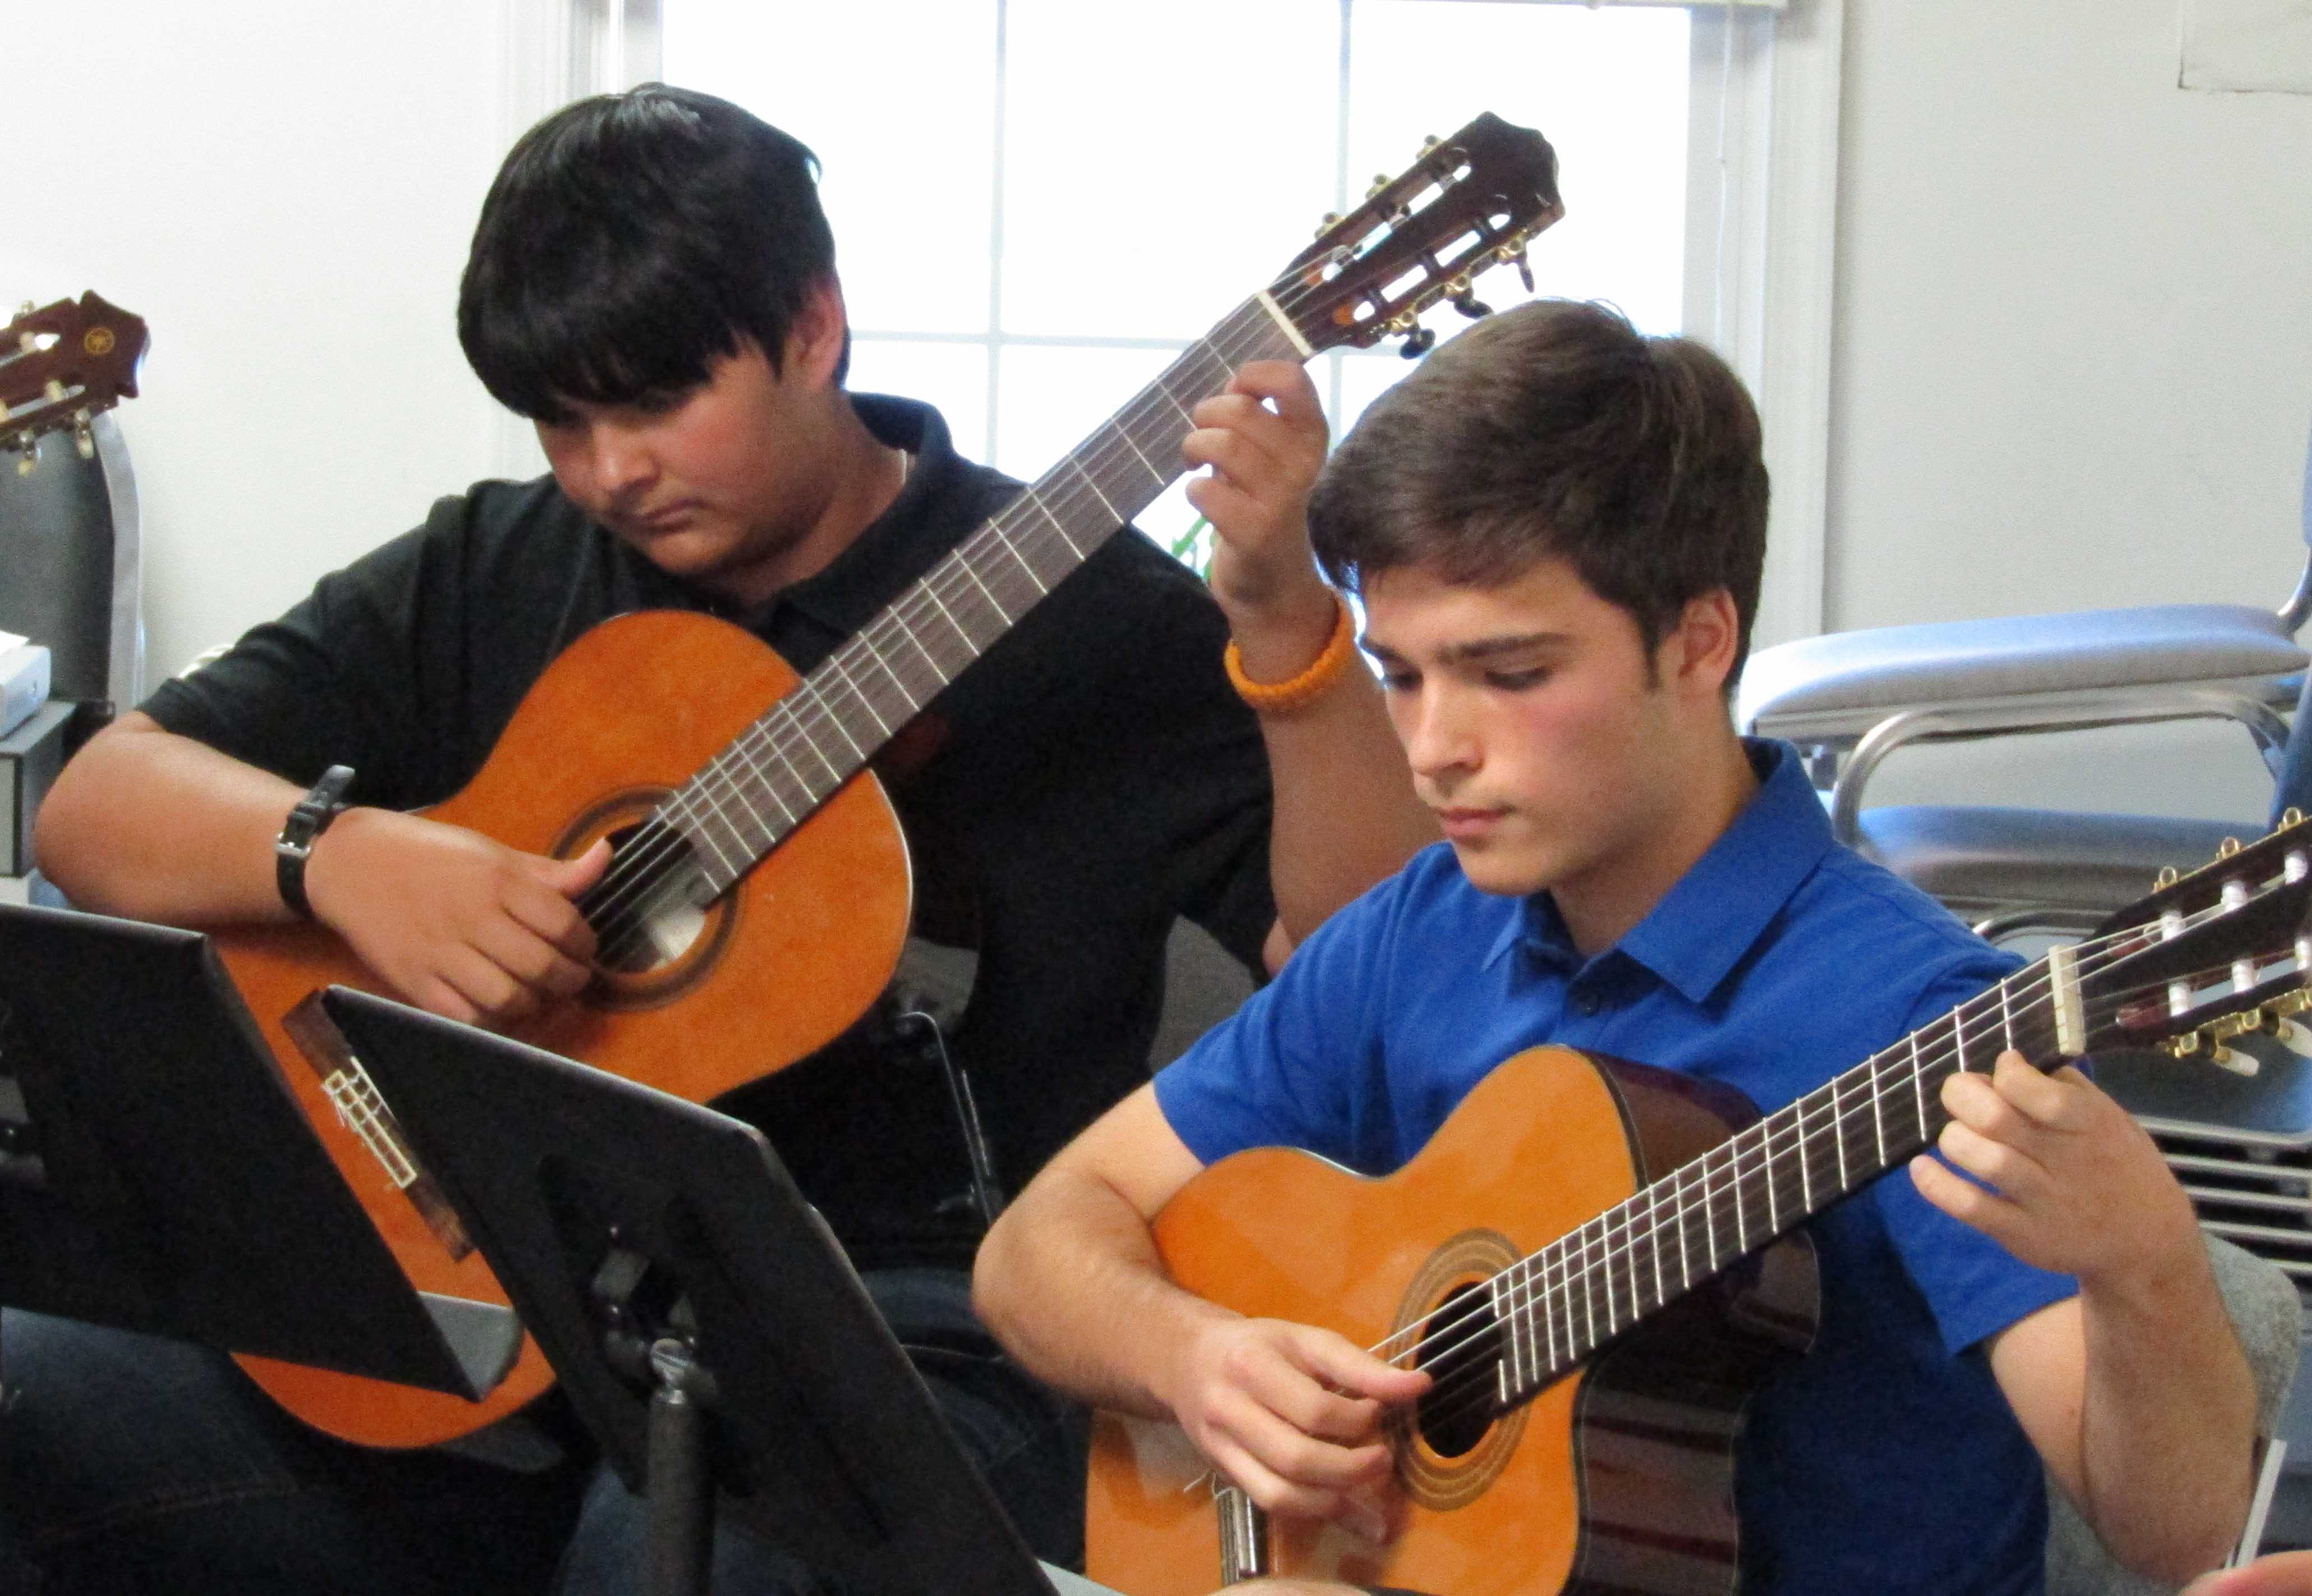 Classical guitar students